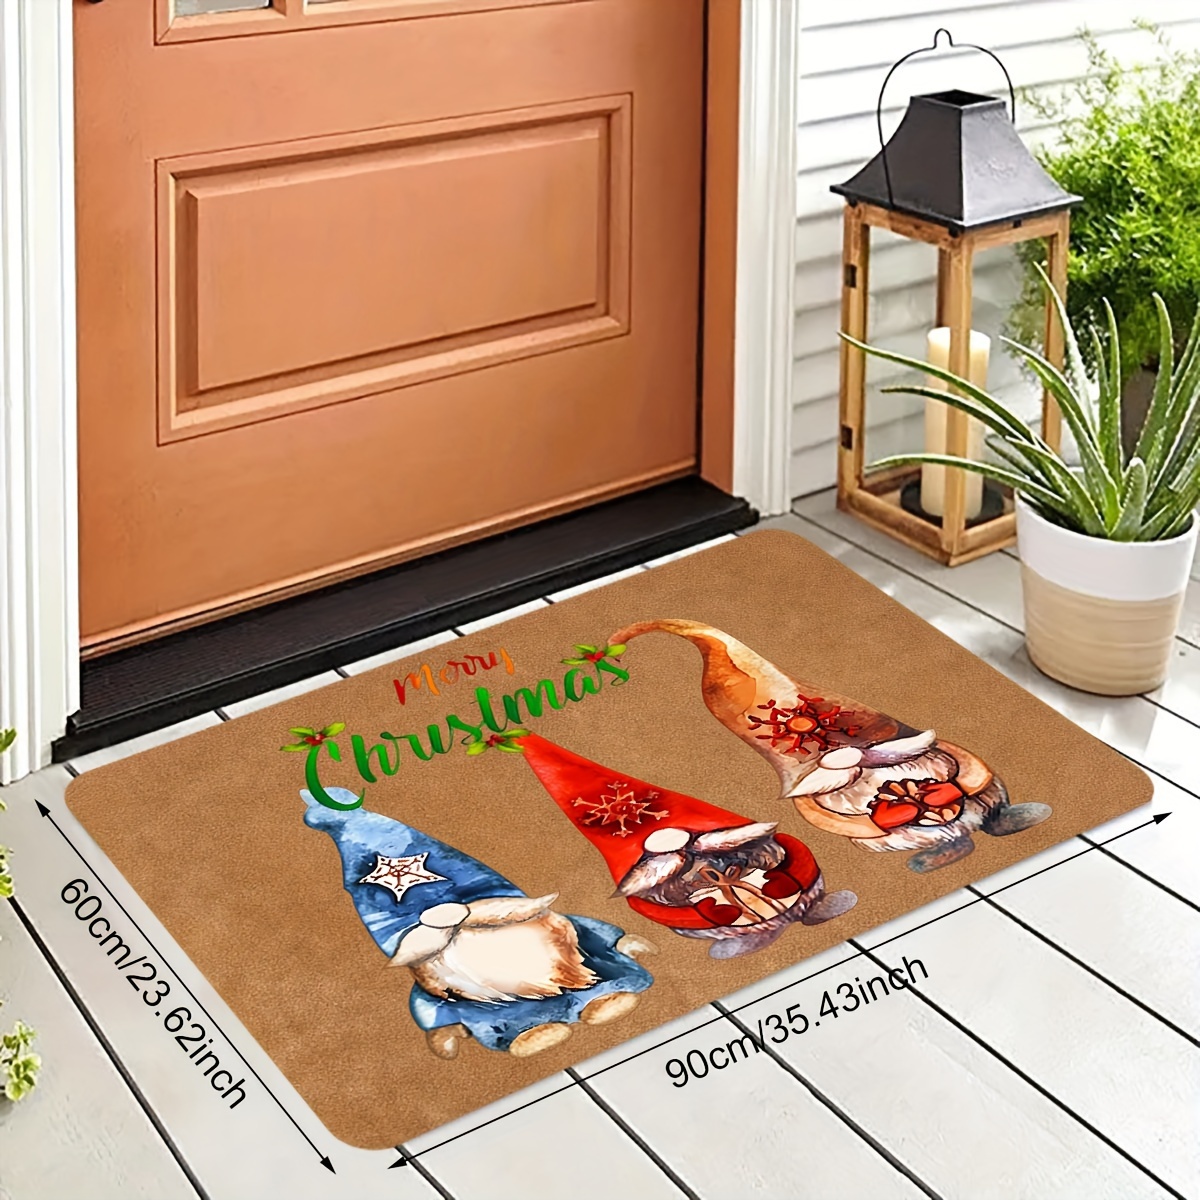 Christmas Welcome Gnome Doormat Front Porch Rugs Welcome Mat Christmas  Gnome Door Mat Indoor Outdoor Doormats Entrance Carpet